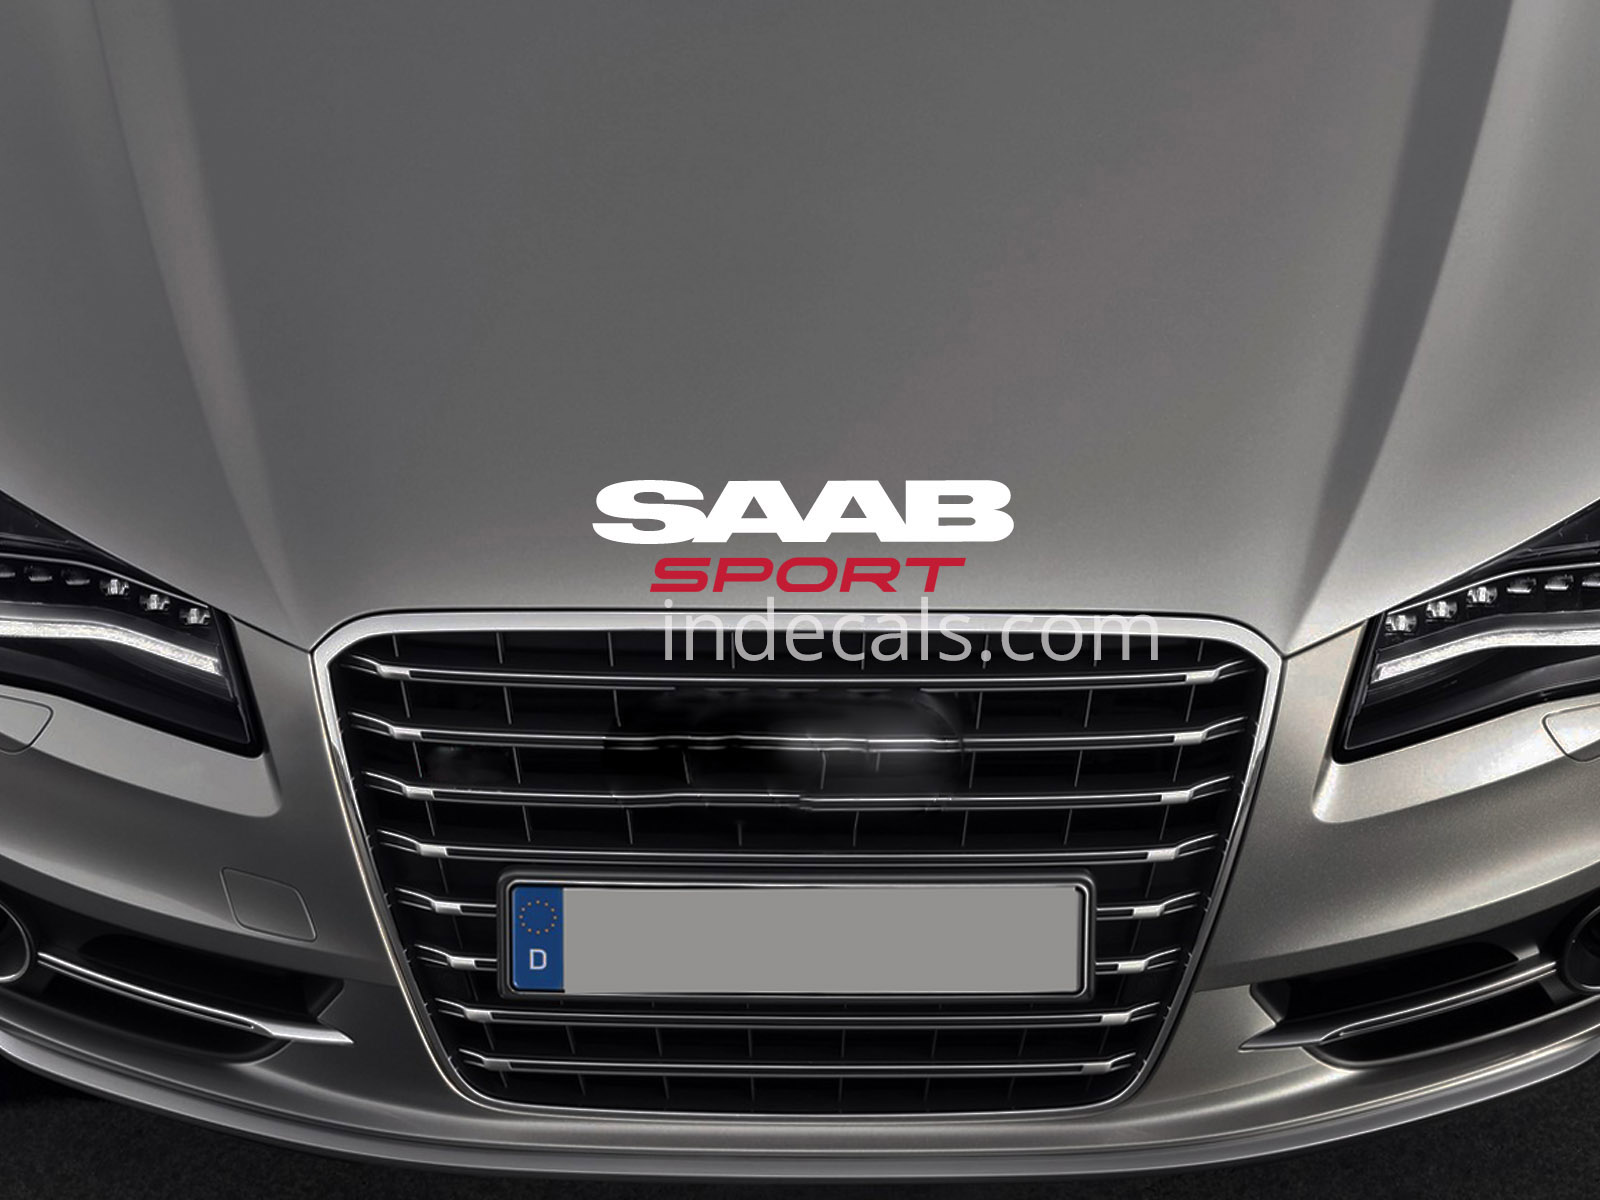 1 x Saab Sport Sticker for Bonnet - White & Red